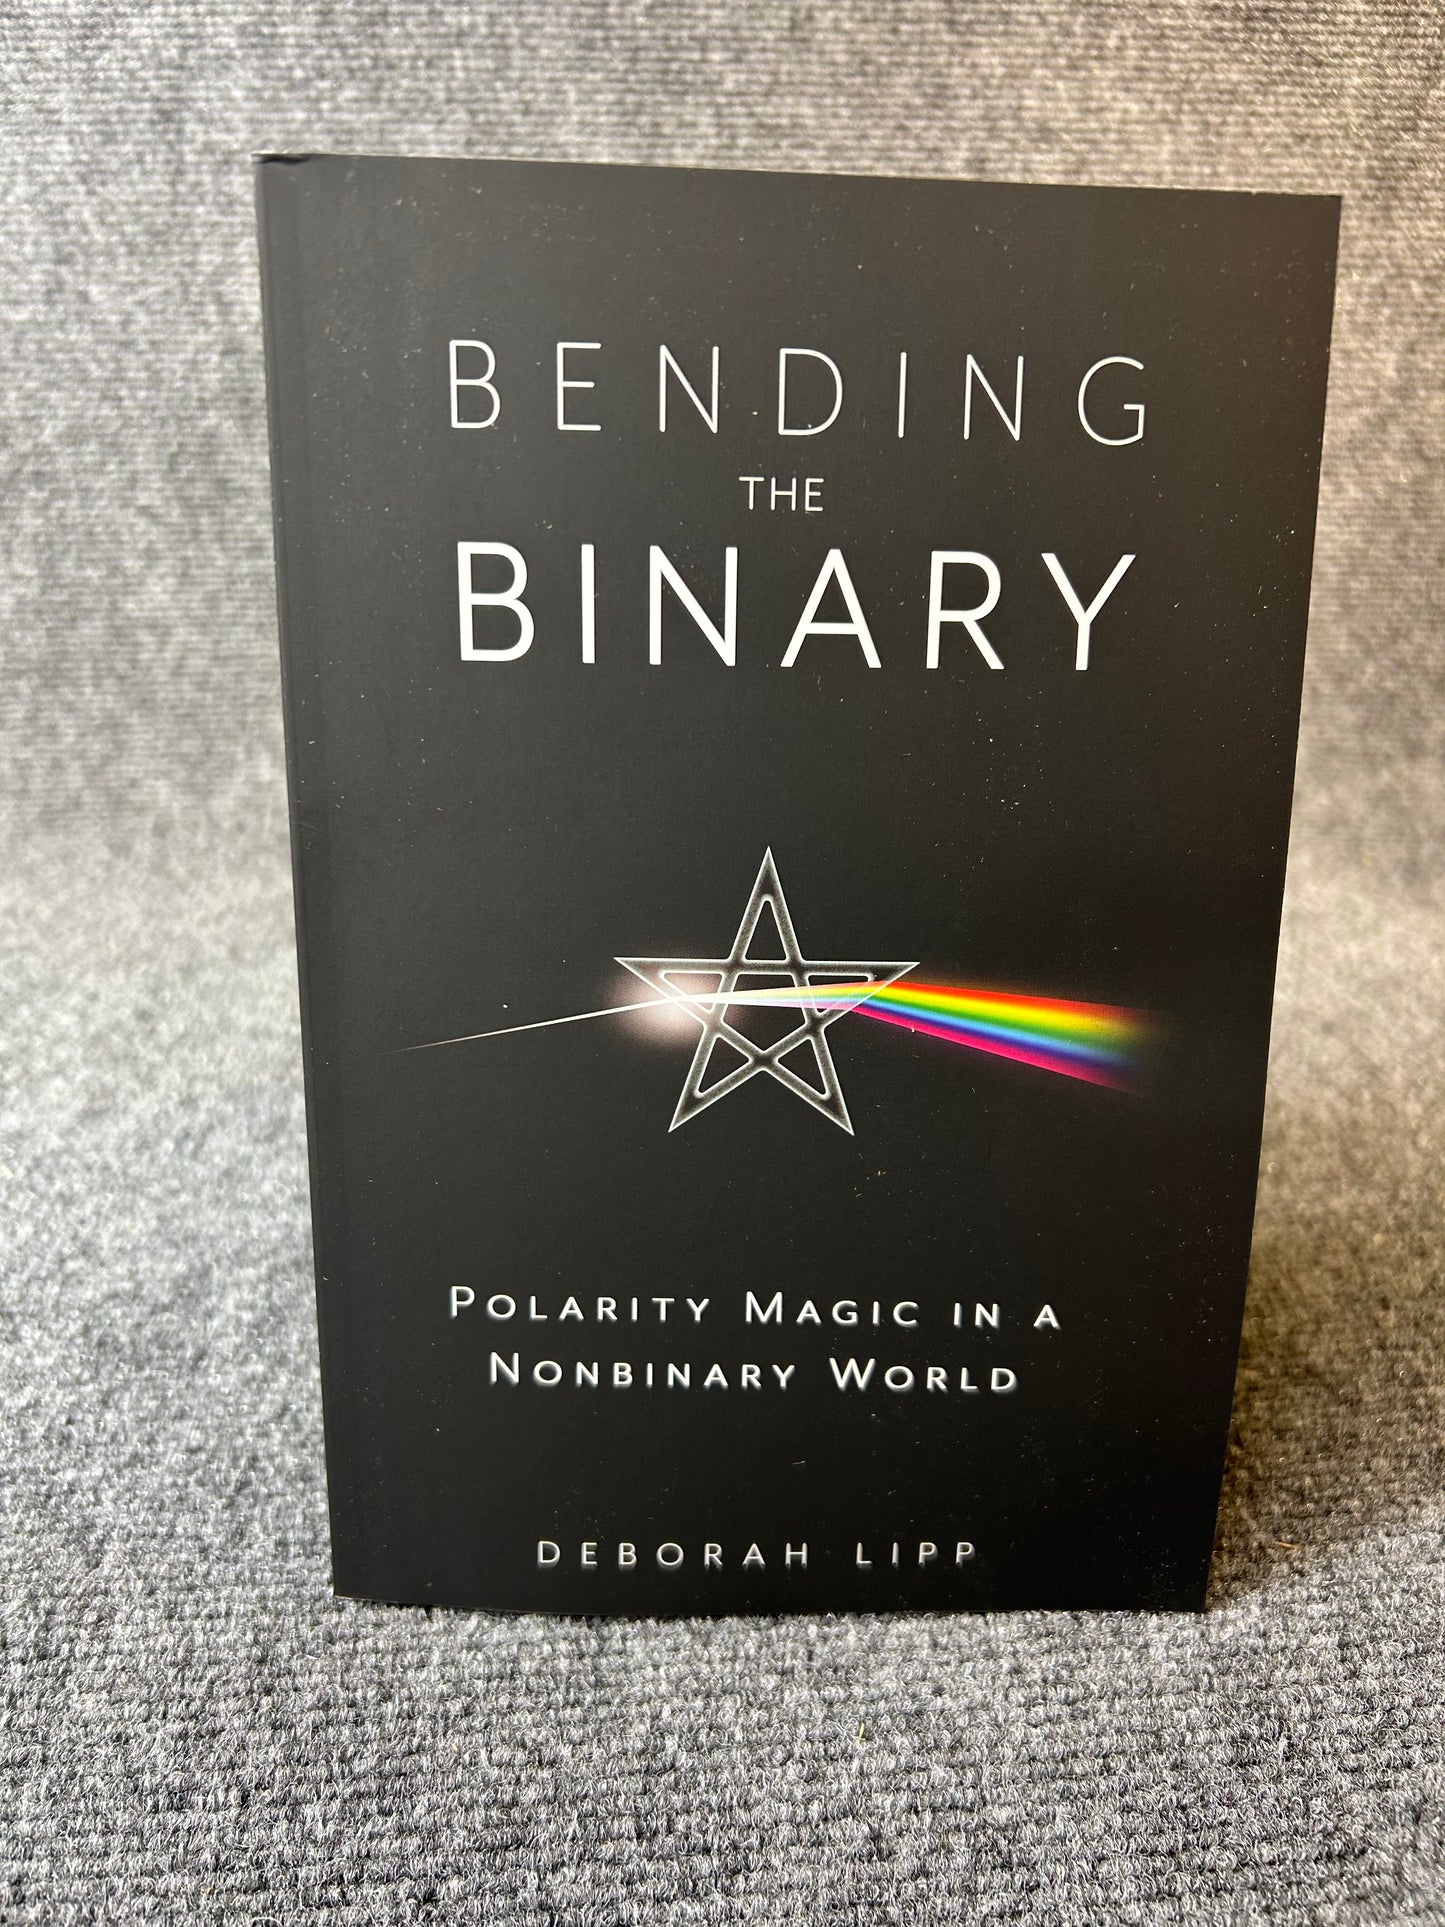 Bending the Binary by Deborah Lipp